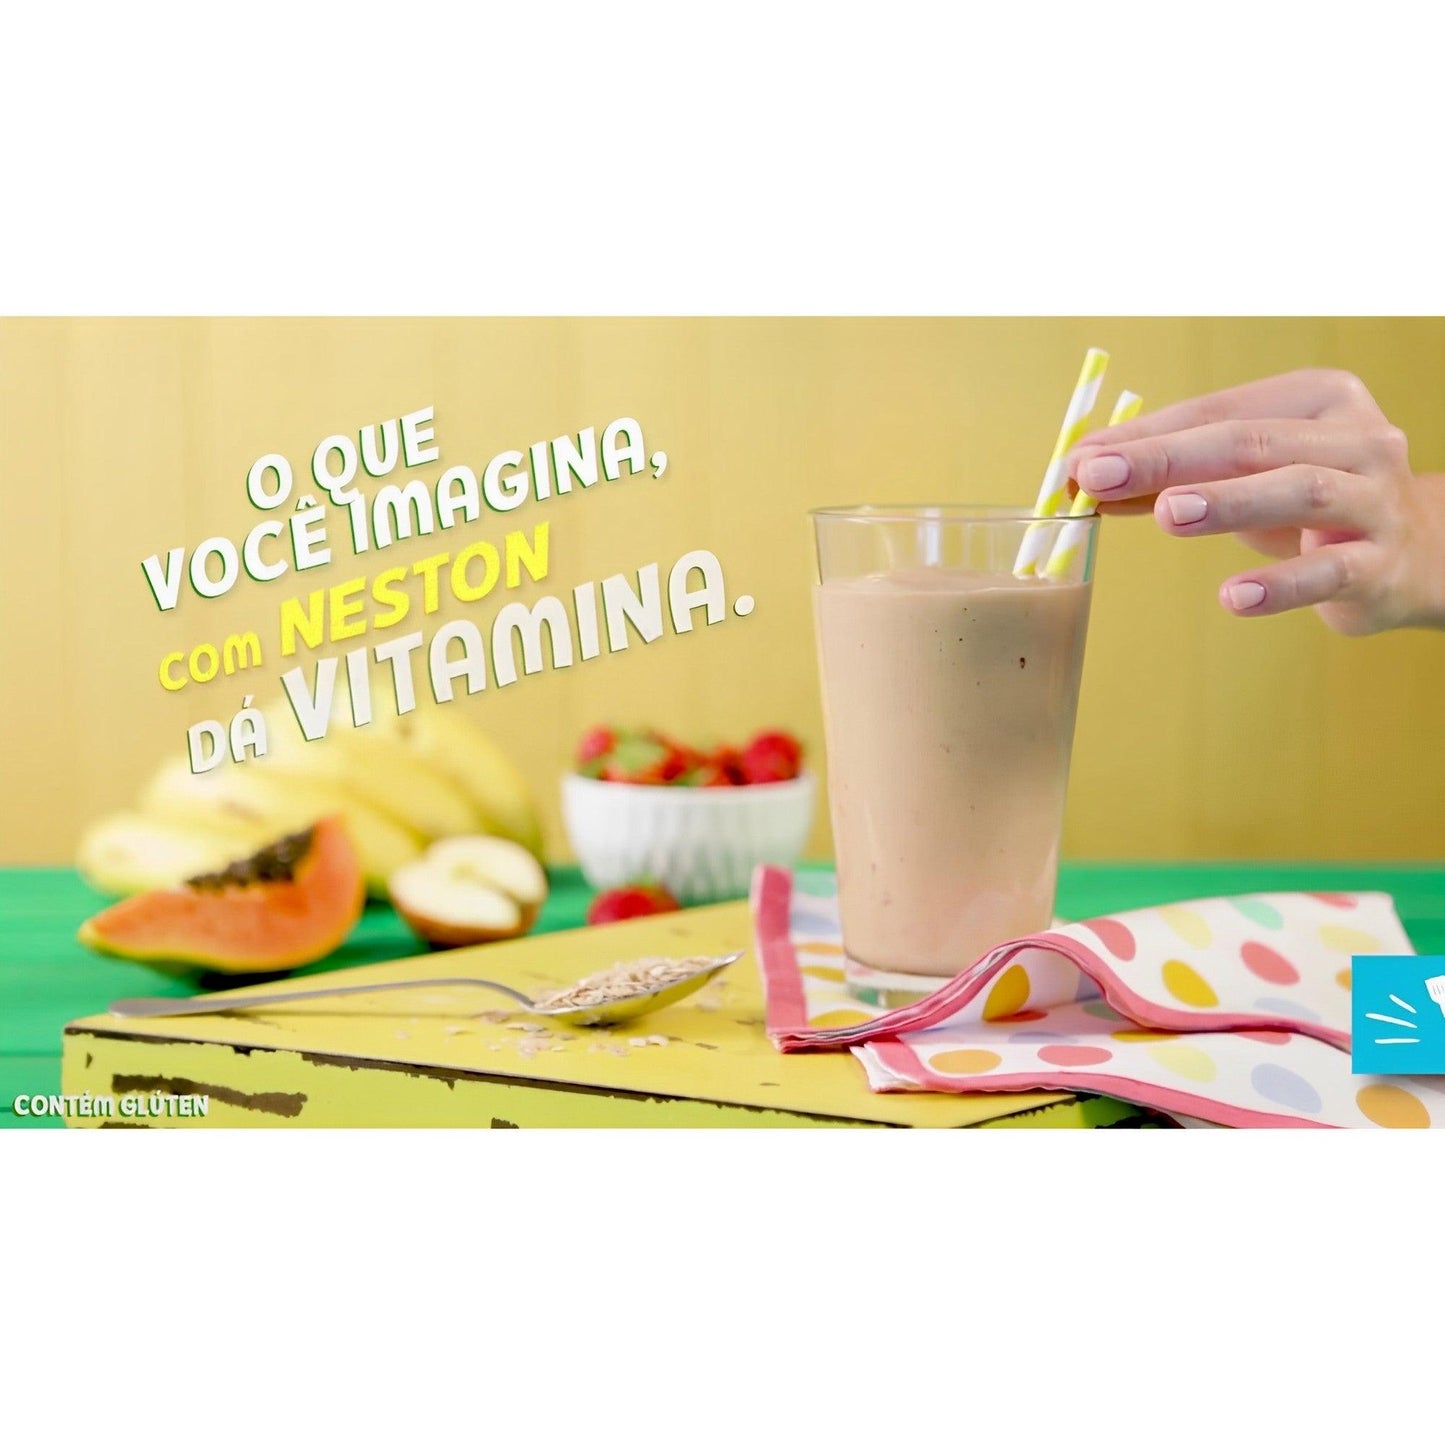 Nestlé Neston Vitamin Apple, Banana & Papaya 14.10 oz. (Pack of 2) - Brazilian Shop